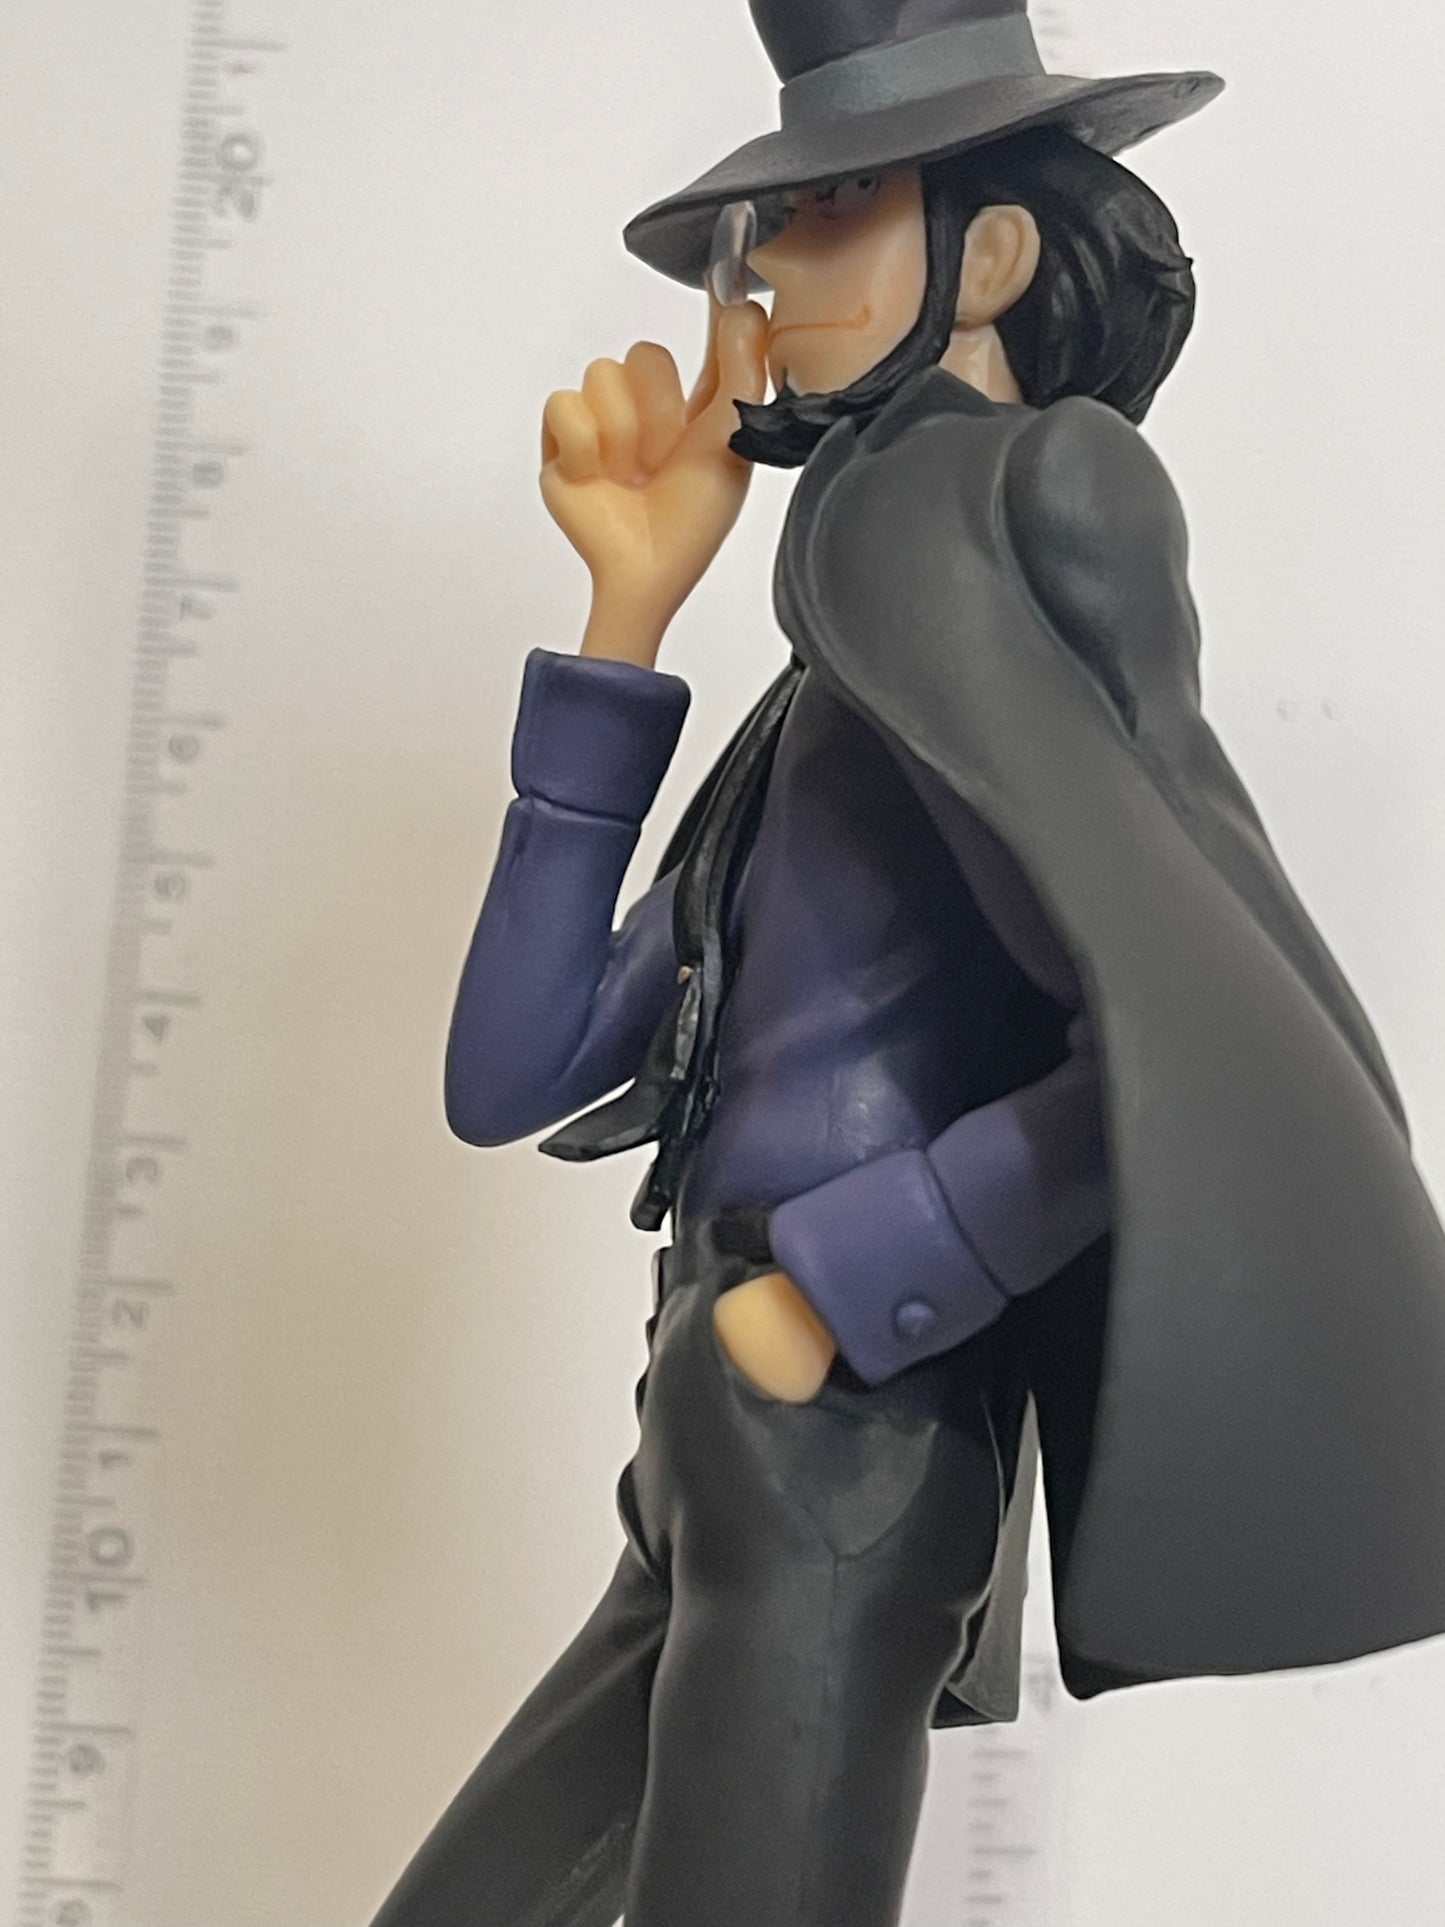 Lupin the 3th Part 5 Creator X Creator series figure Daisuke Jigen 19 cm Craneking Banpresto #032